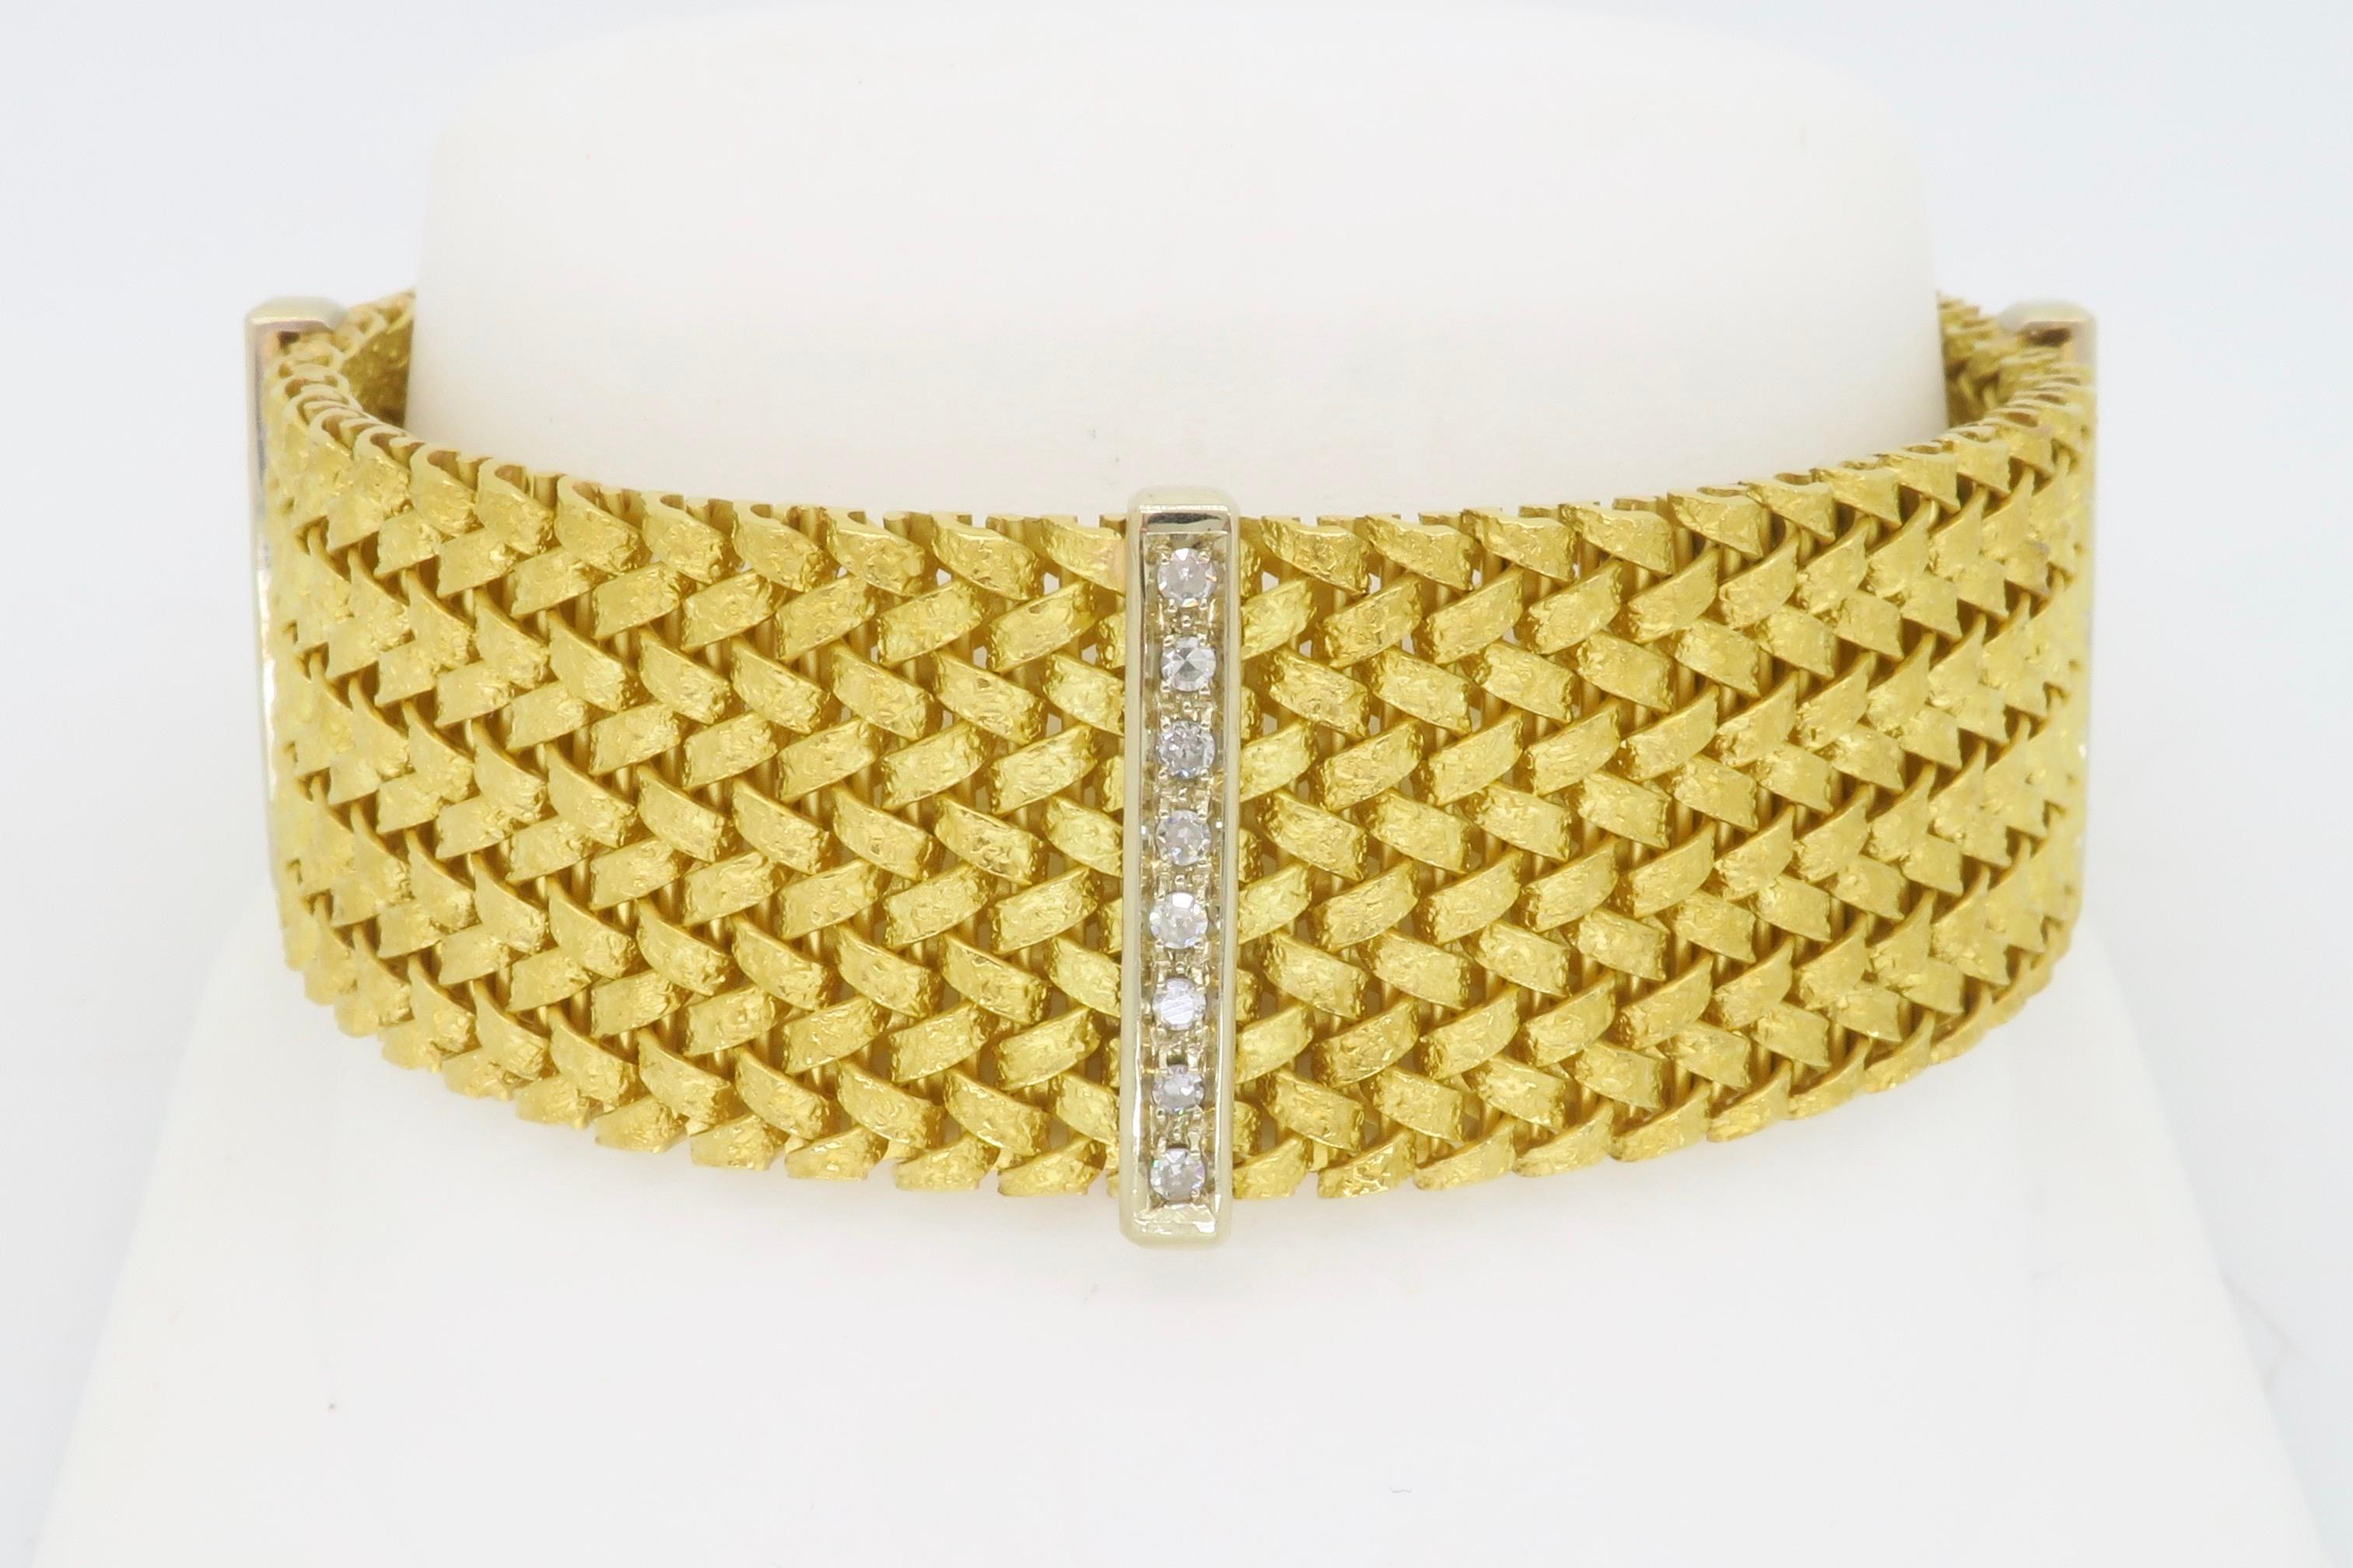 Intricate solid gold mesh bracelet with Diamond bars, made in 18k. 

Gemstone: Diamond
Diamond Carat Weight: Approximately 1.00CTW
Diamond Cut: Single Cut Diamonds
Average Diamond Color: G-H
Average Diamond Clarity: VS-SI
Metal: 18k Yellow Gold